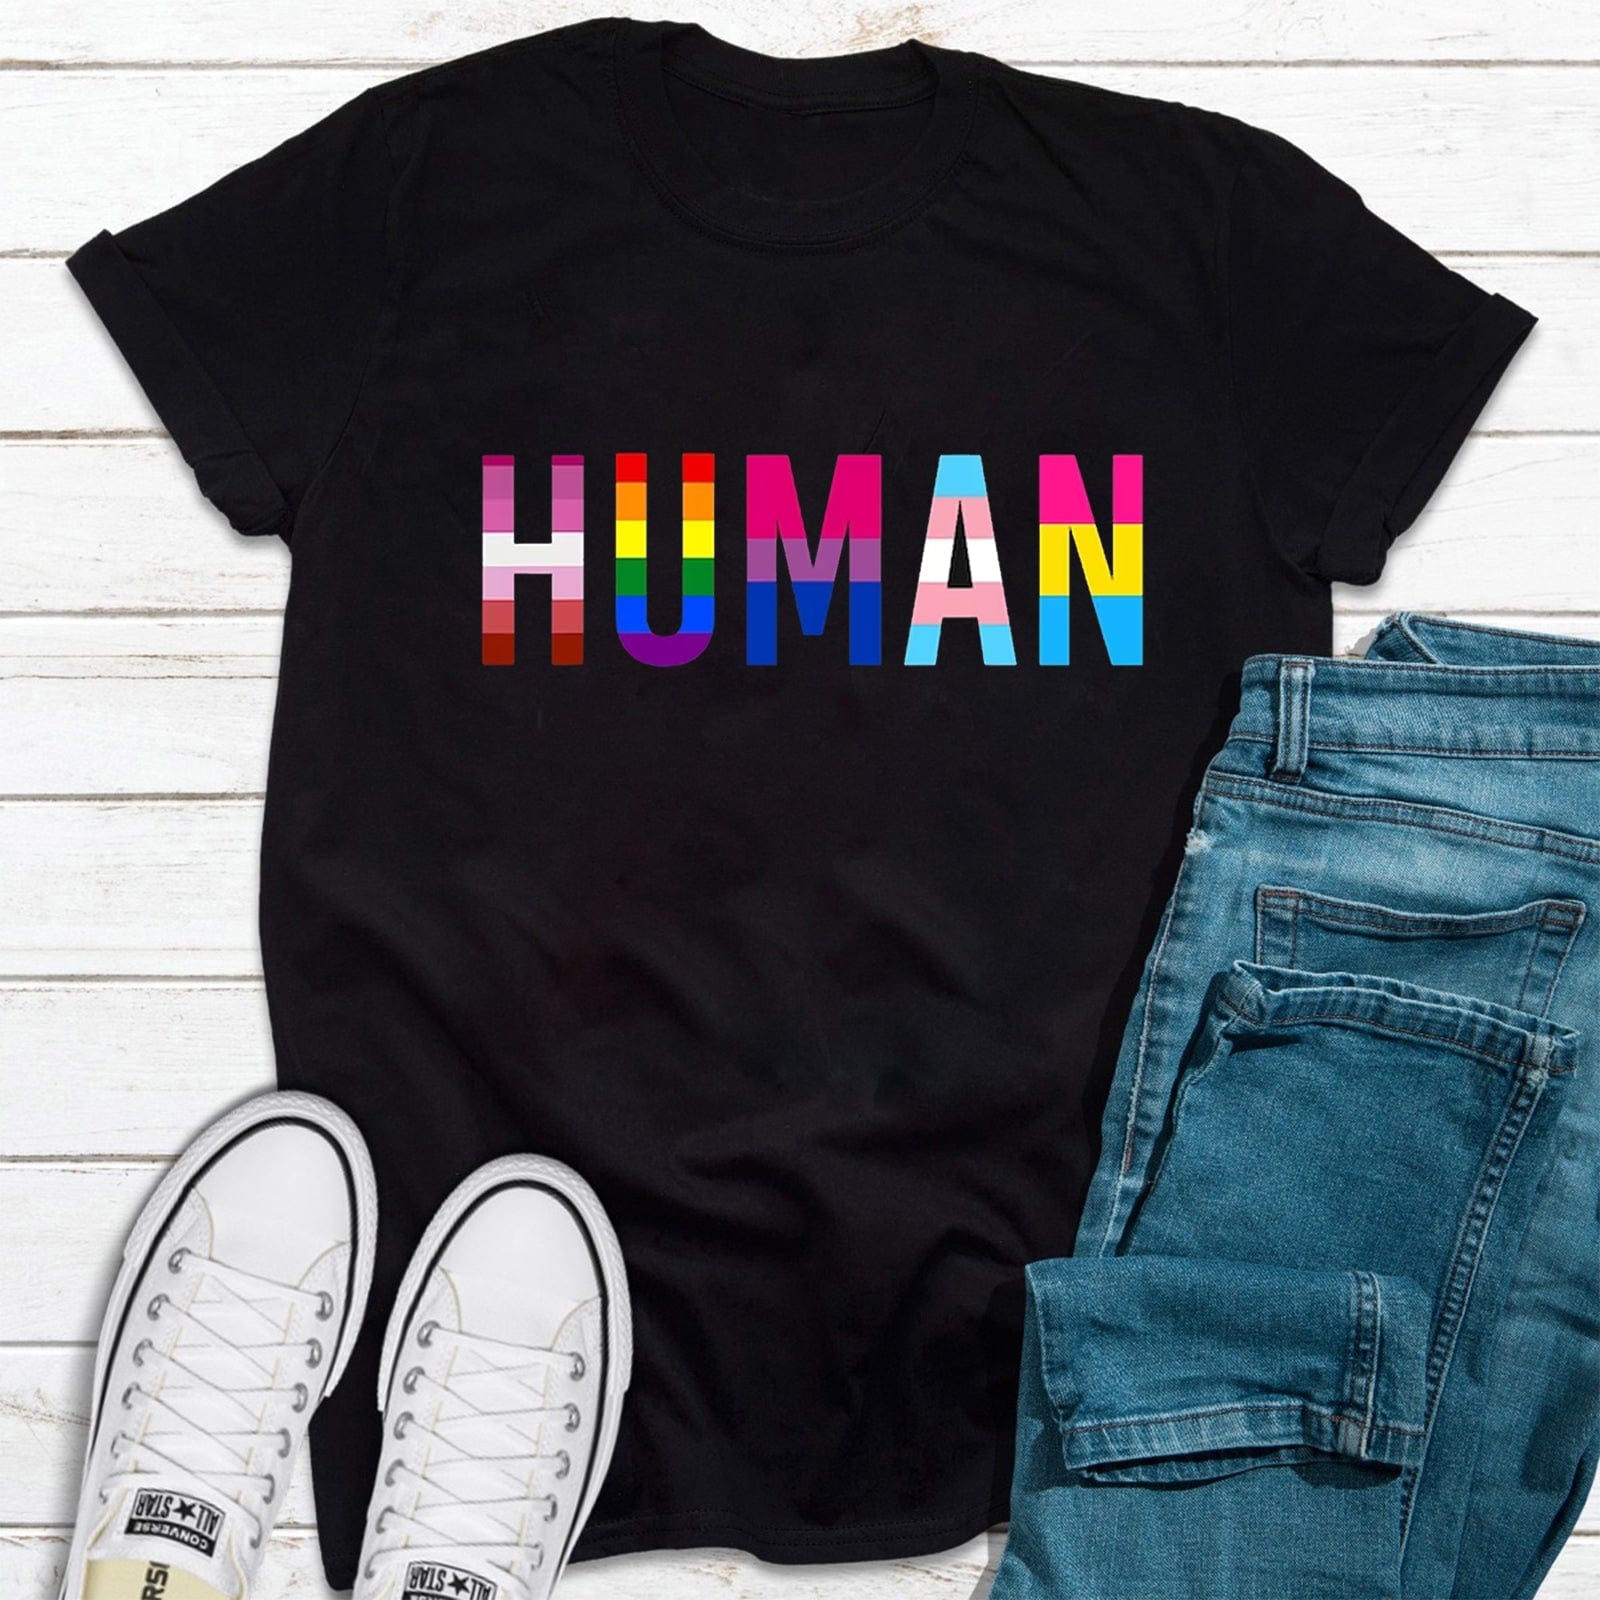 Human Rights LGBT Rainbow Shirt